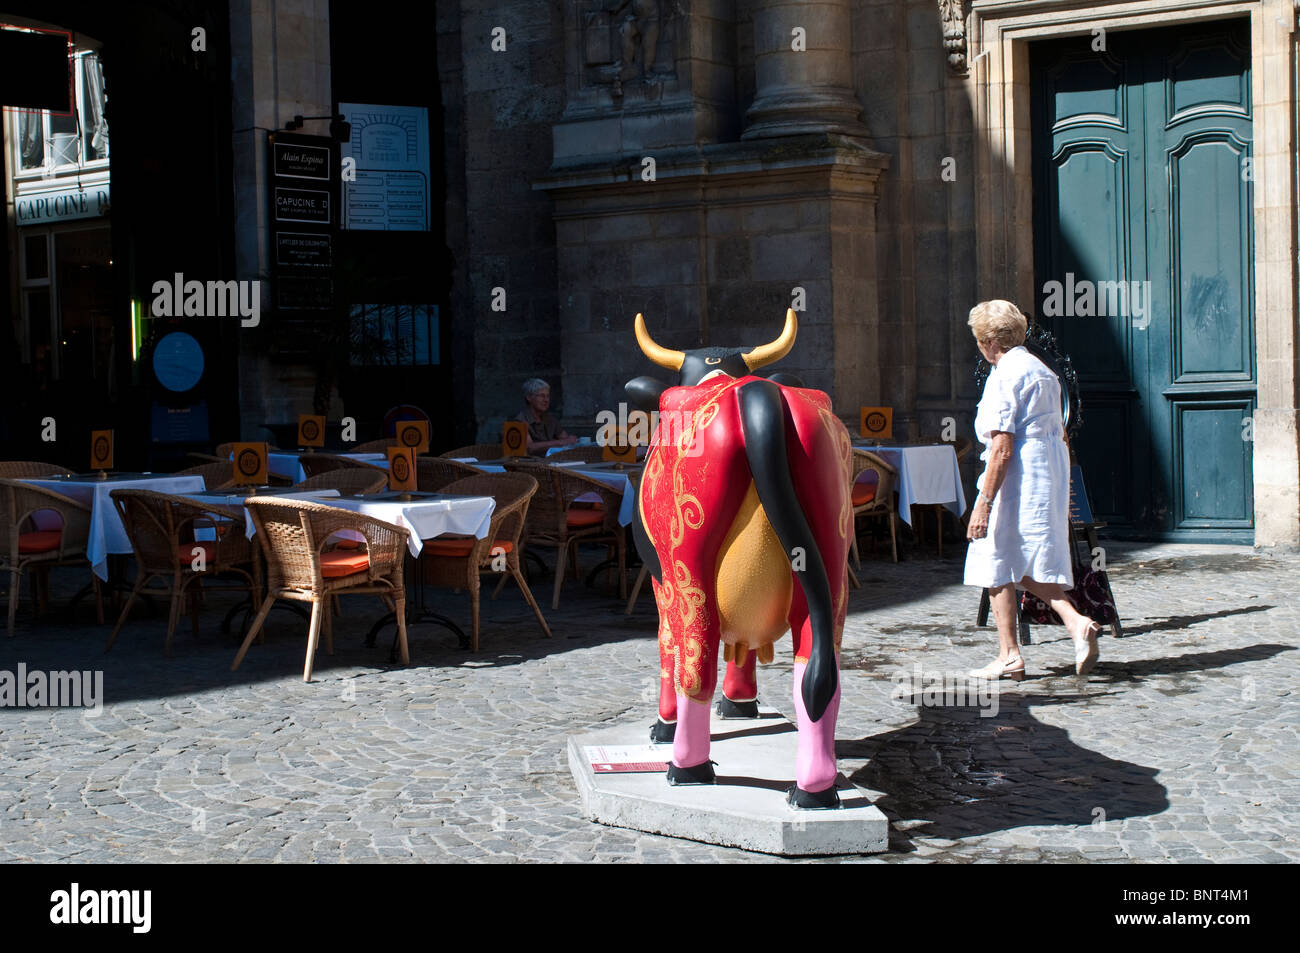 Painted sculpture of a cow, part of the Cow Parade event, Place du Chapelet, Bordeaux, France Stock Photo